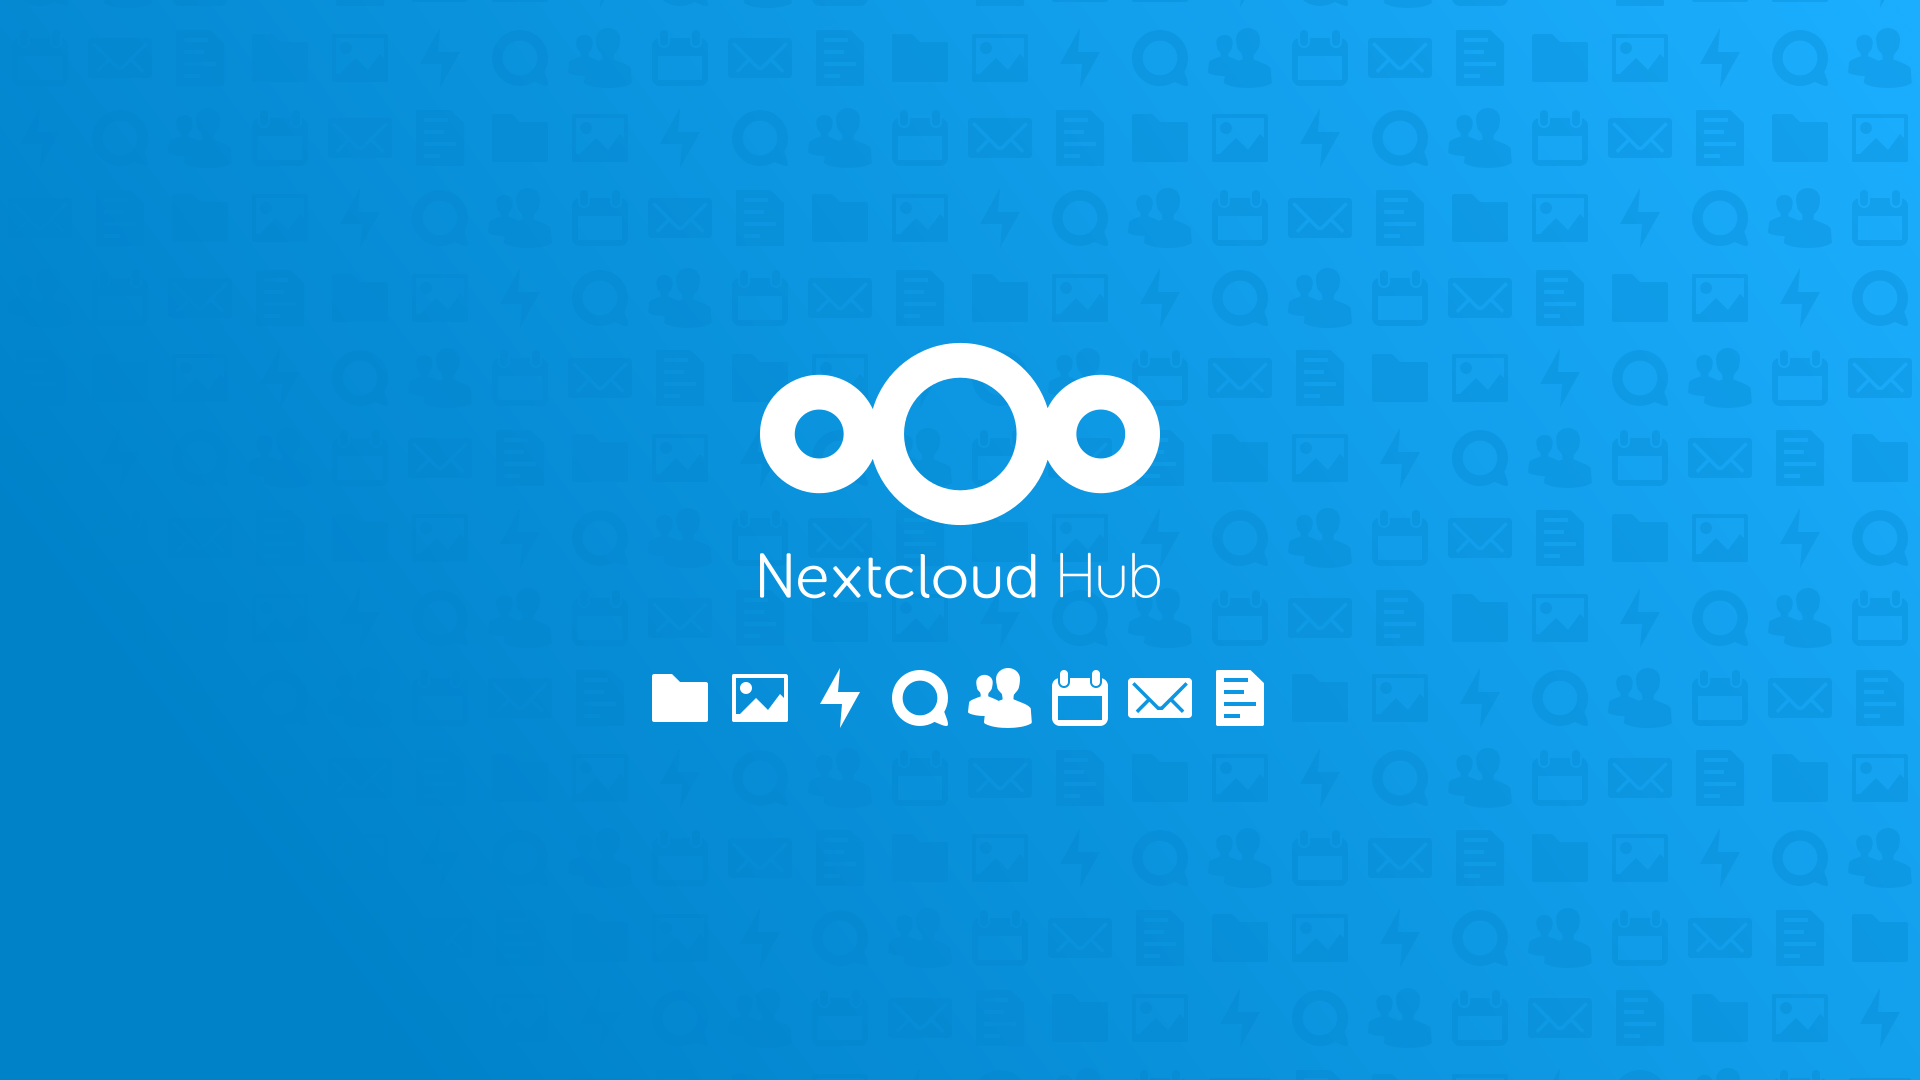 nextcloud hub logo